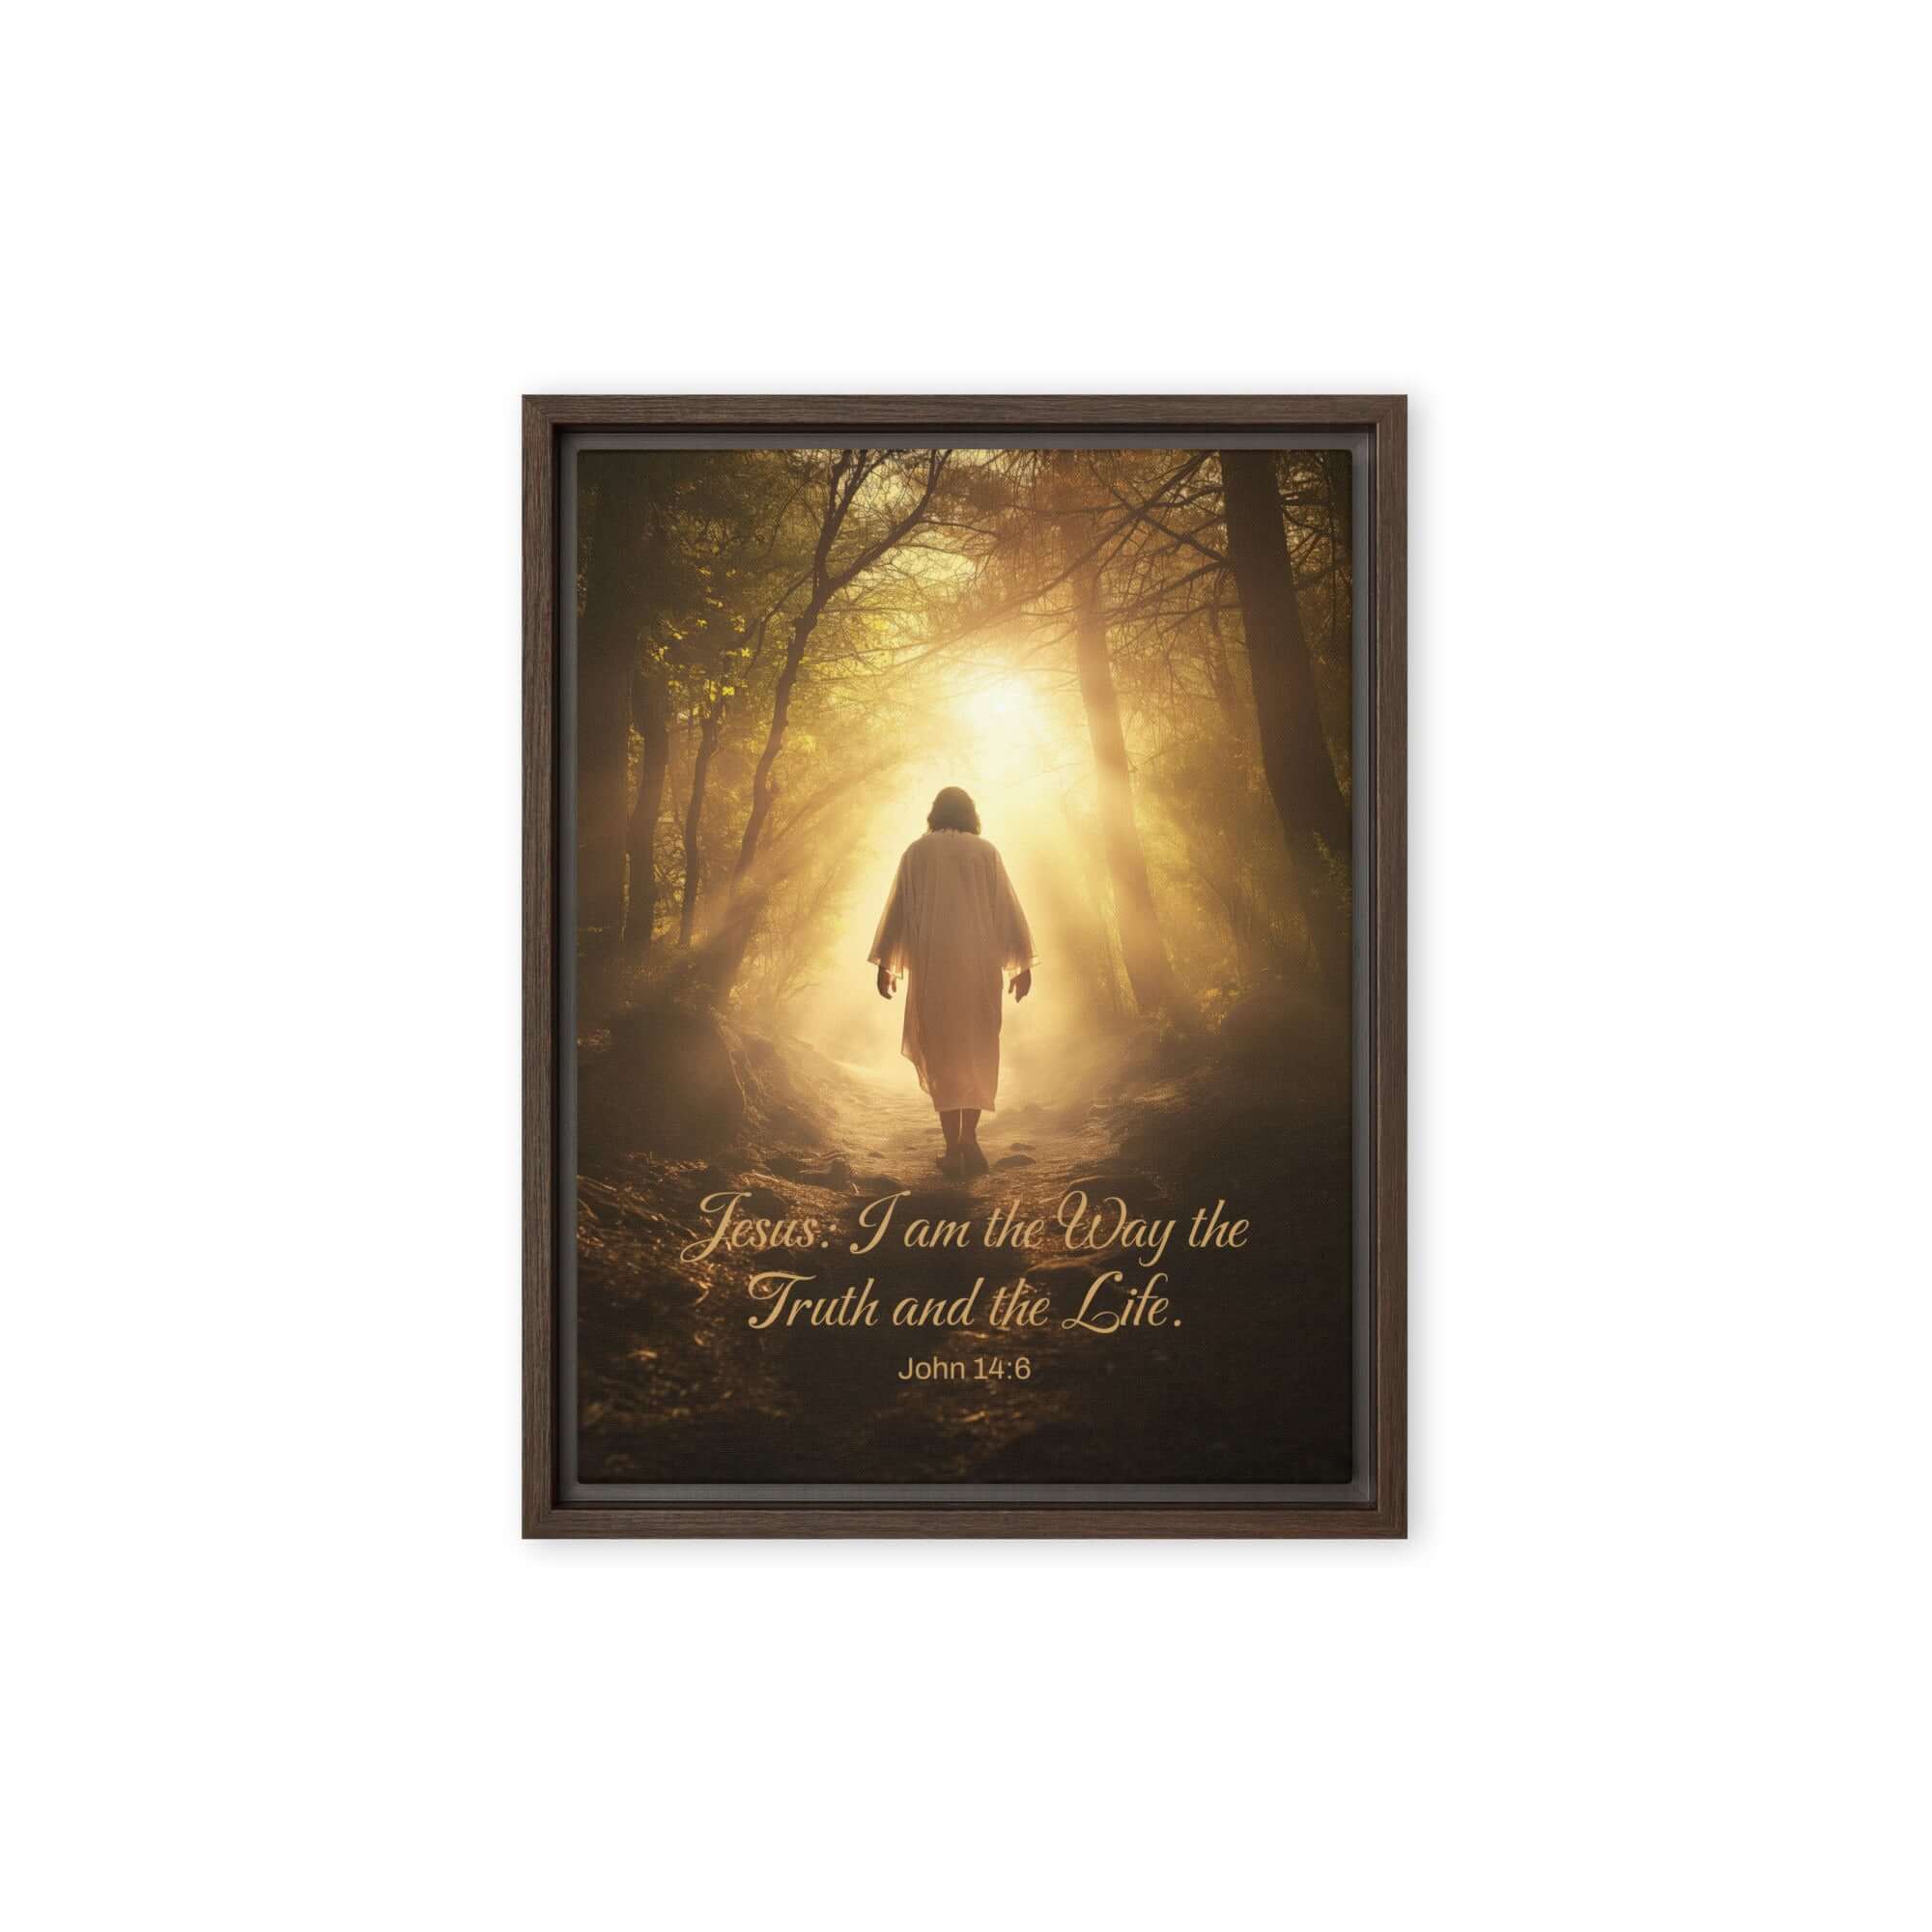 John 14:6 Bible Verse, Forest Image Framed Canvas